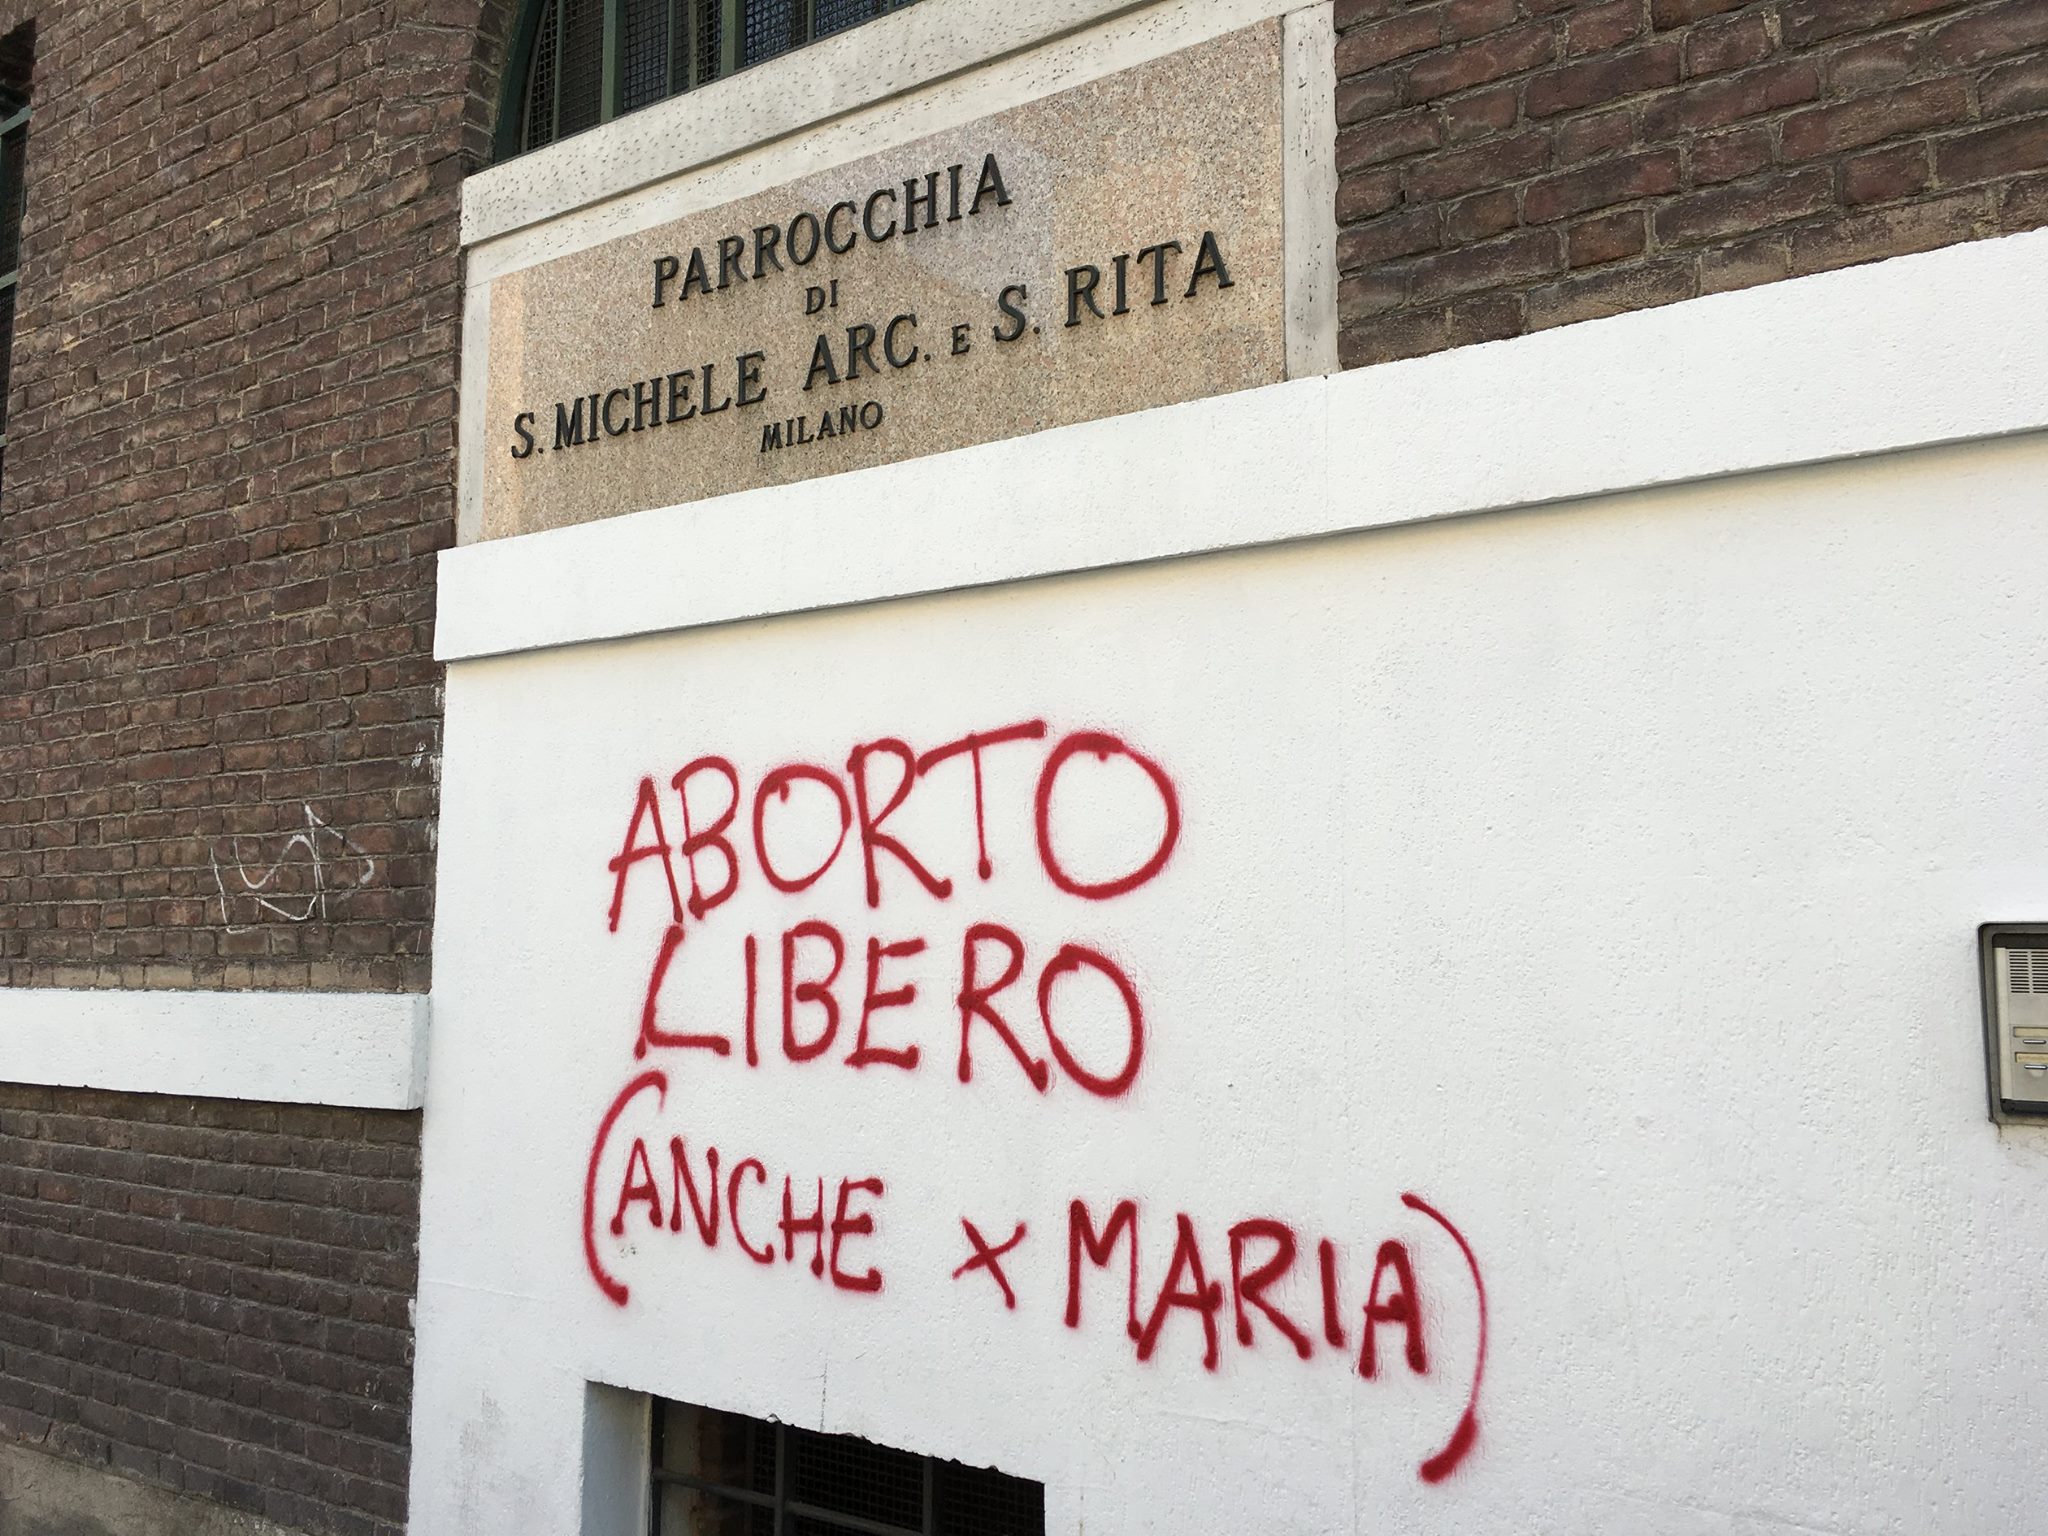 Fr. Andrea's response to abortion graffiti